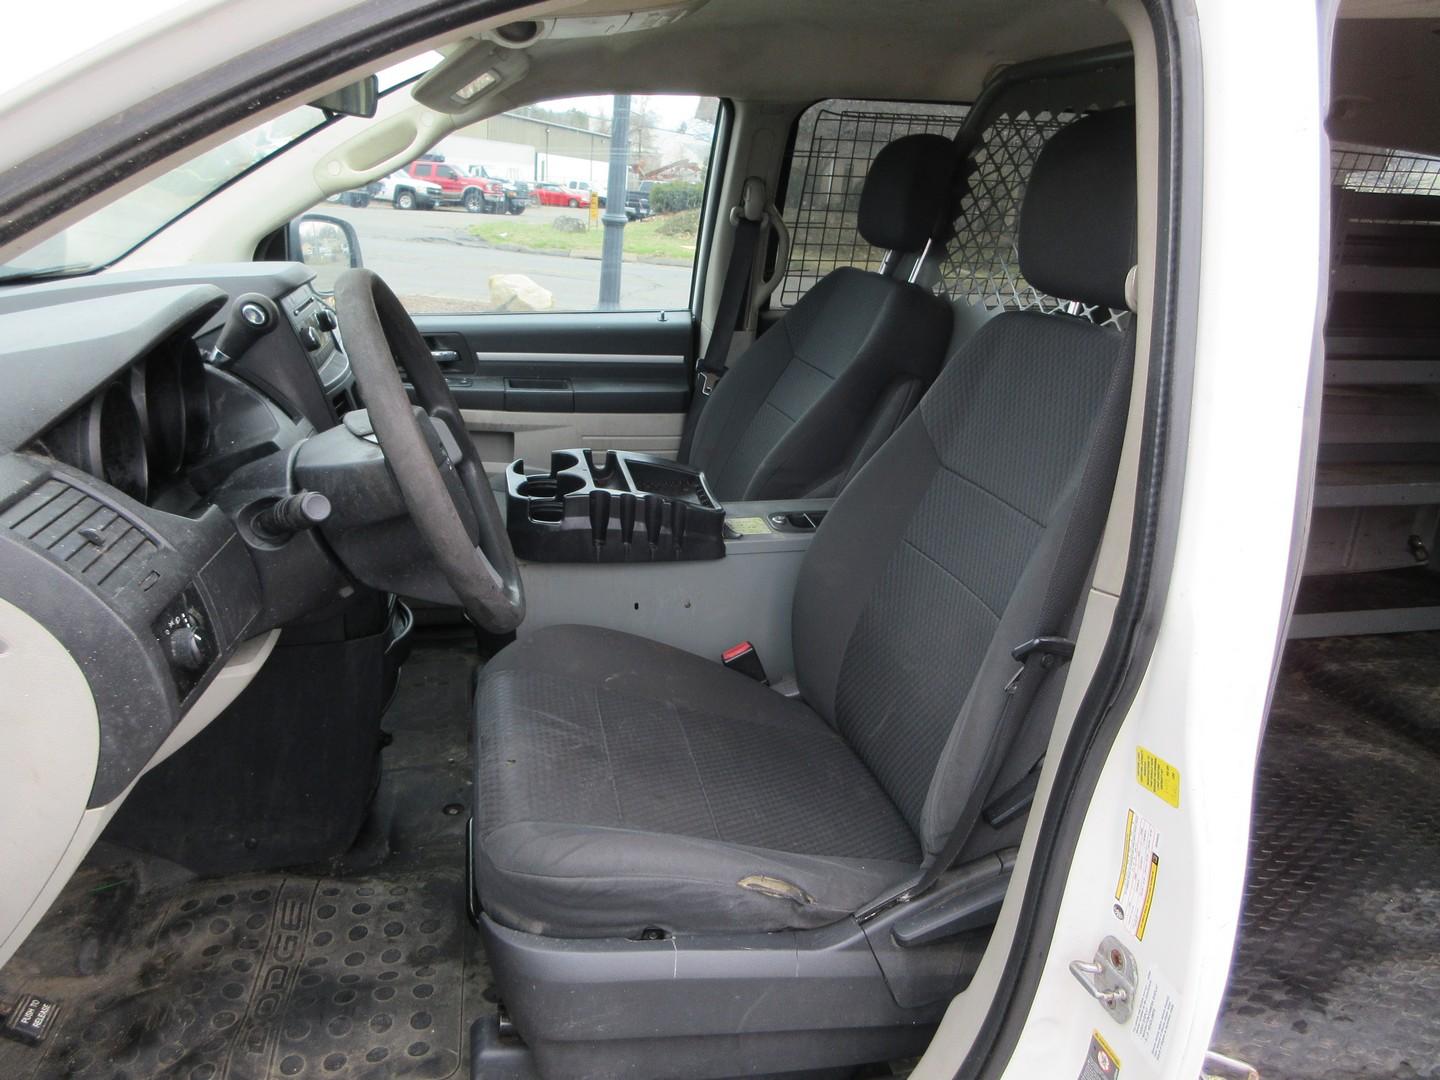 2010 Dodge Grand Caravan Mini Van